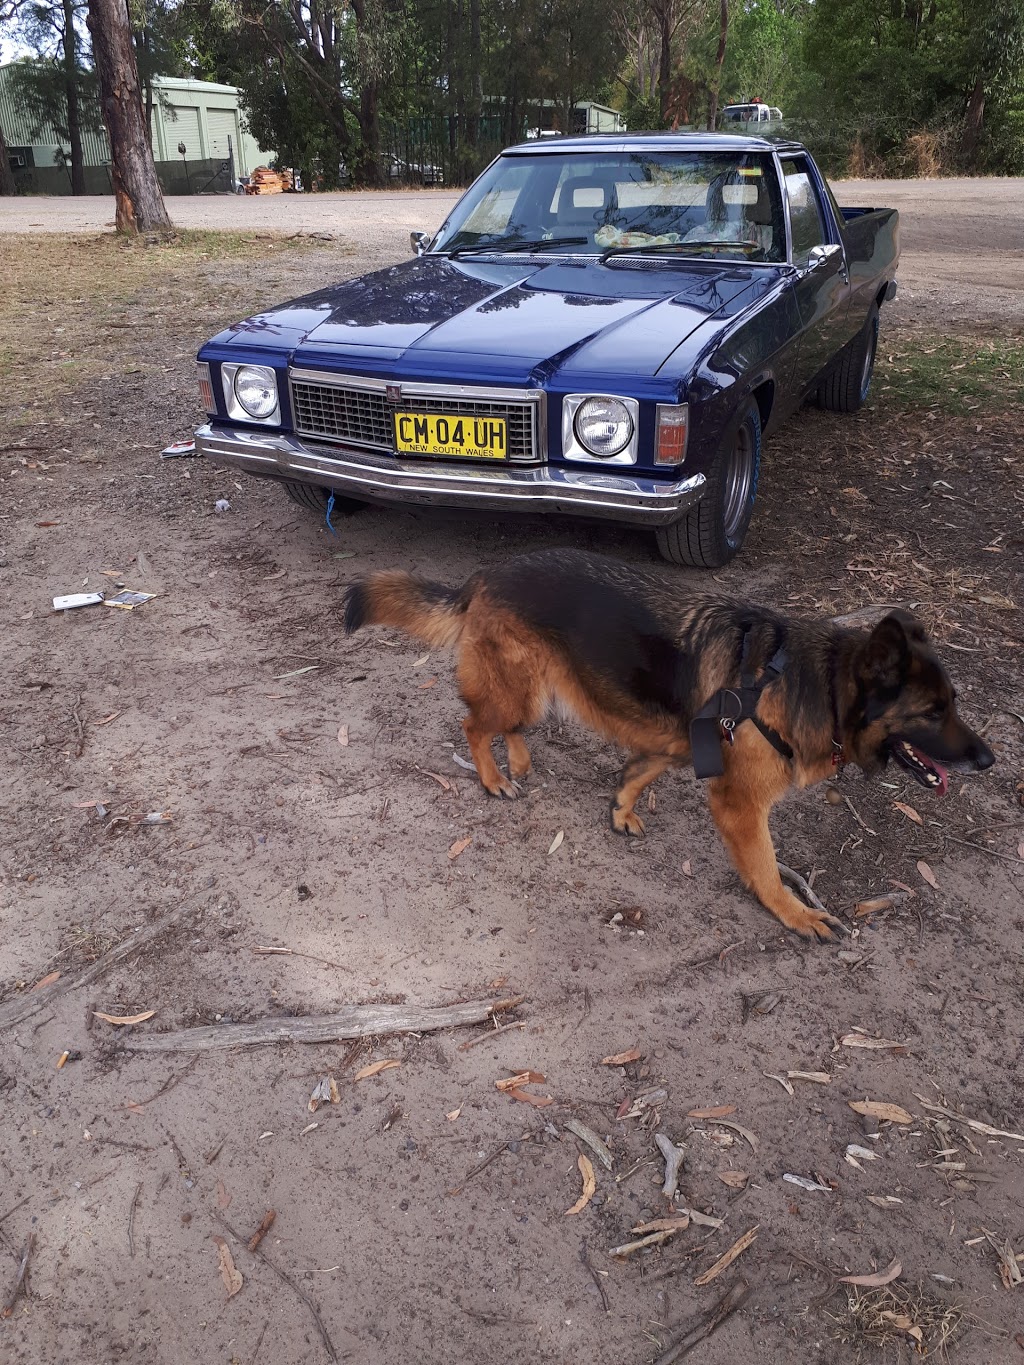 Wyee Dog Exercise Area | park | 11 Tuggarah St, Wyee NSW 2259, Australia